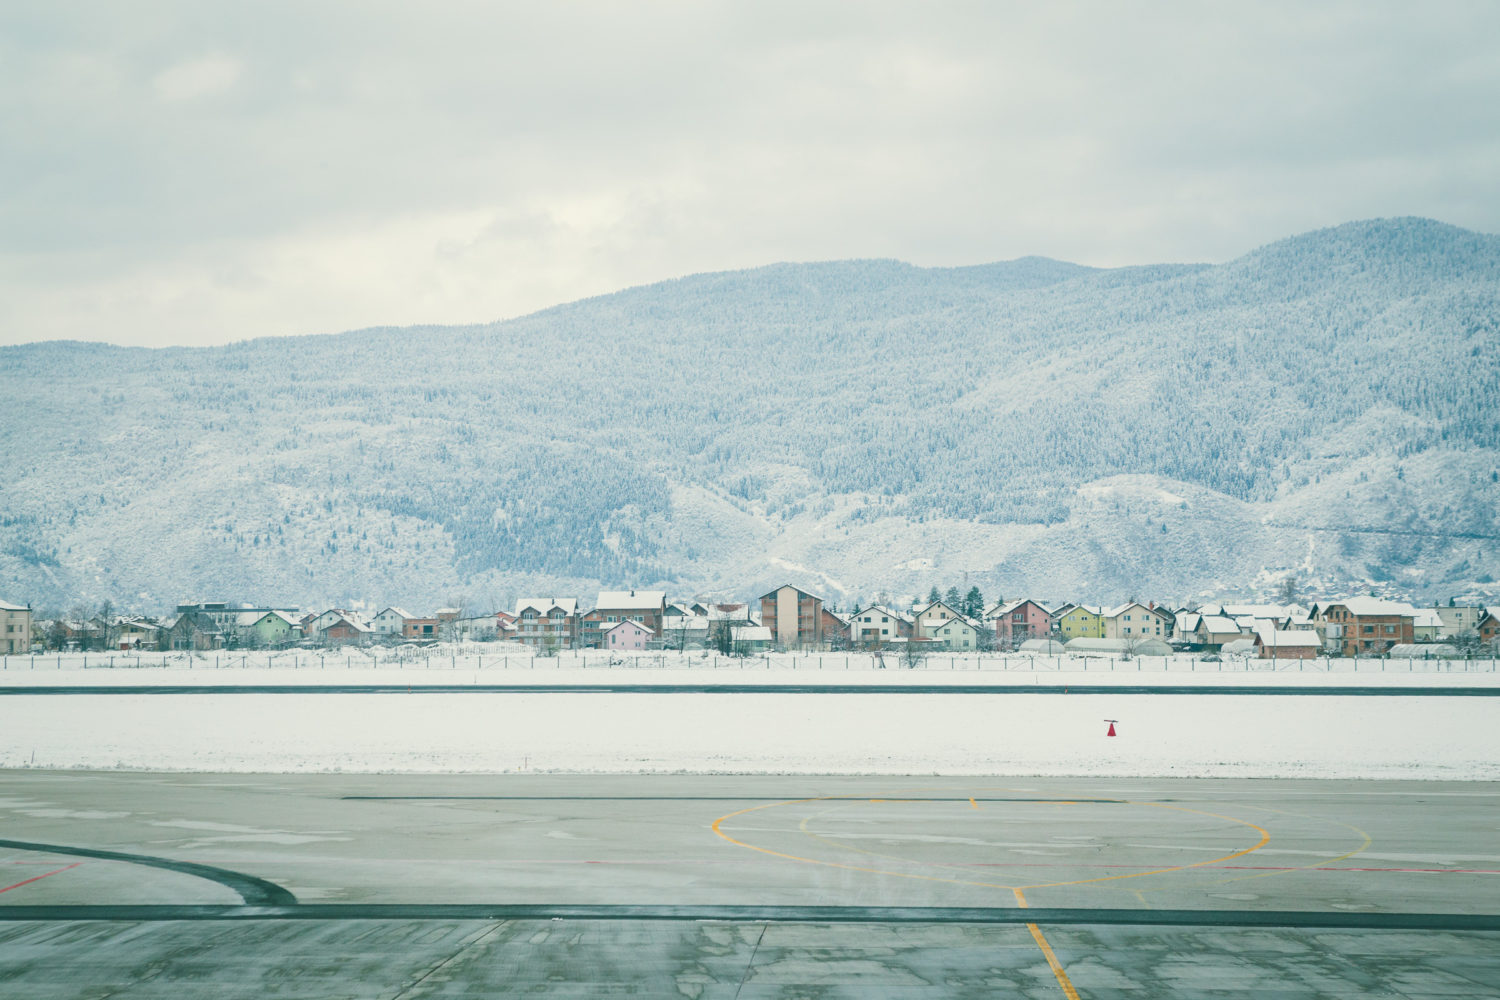 sarajevo national airport snowy hills